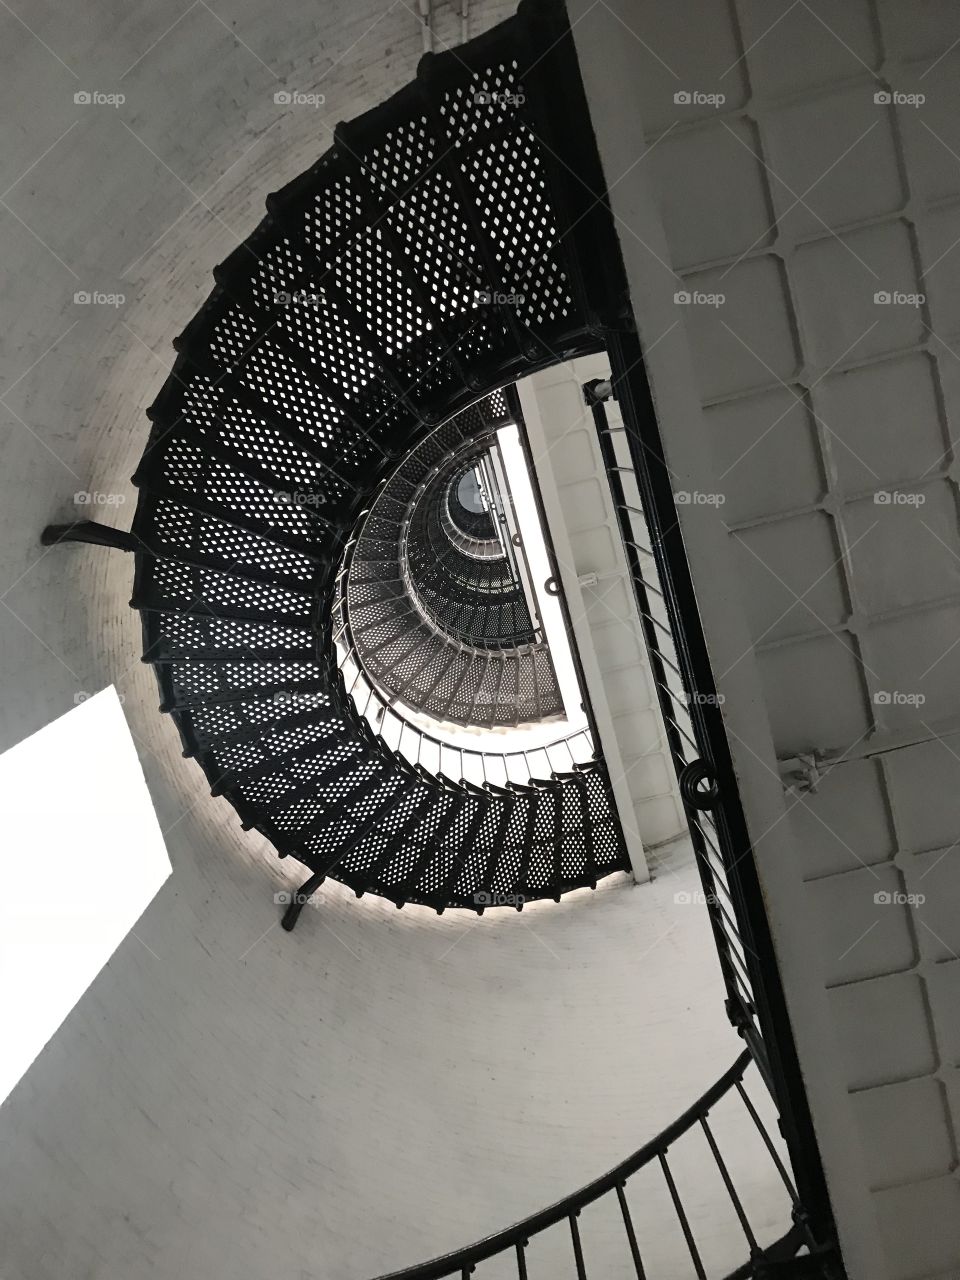 Spiral staircase 